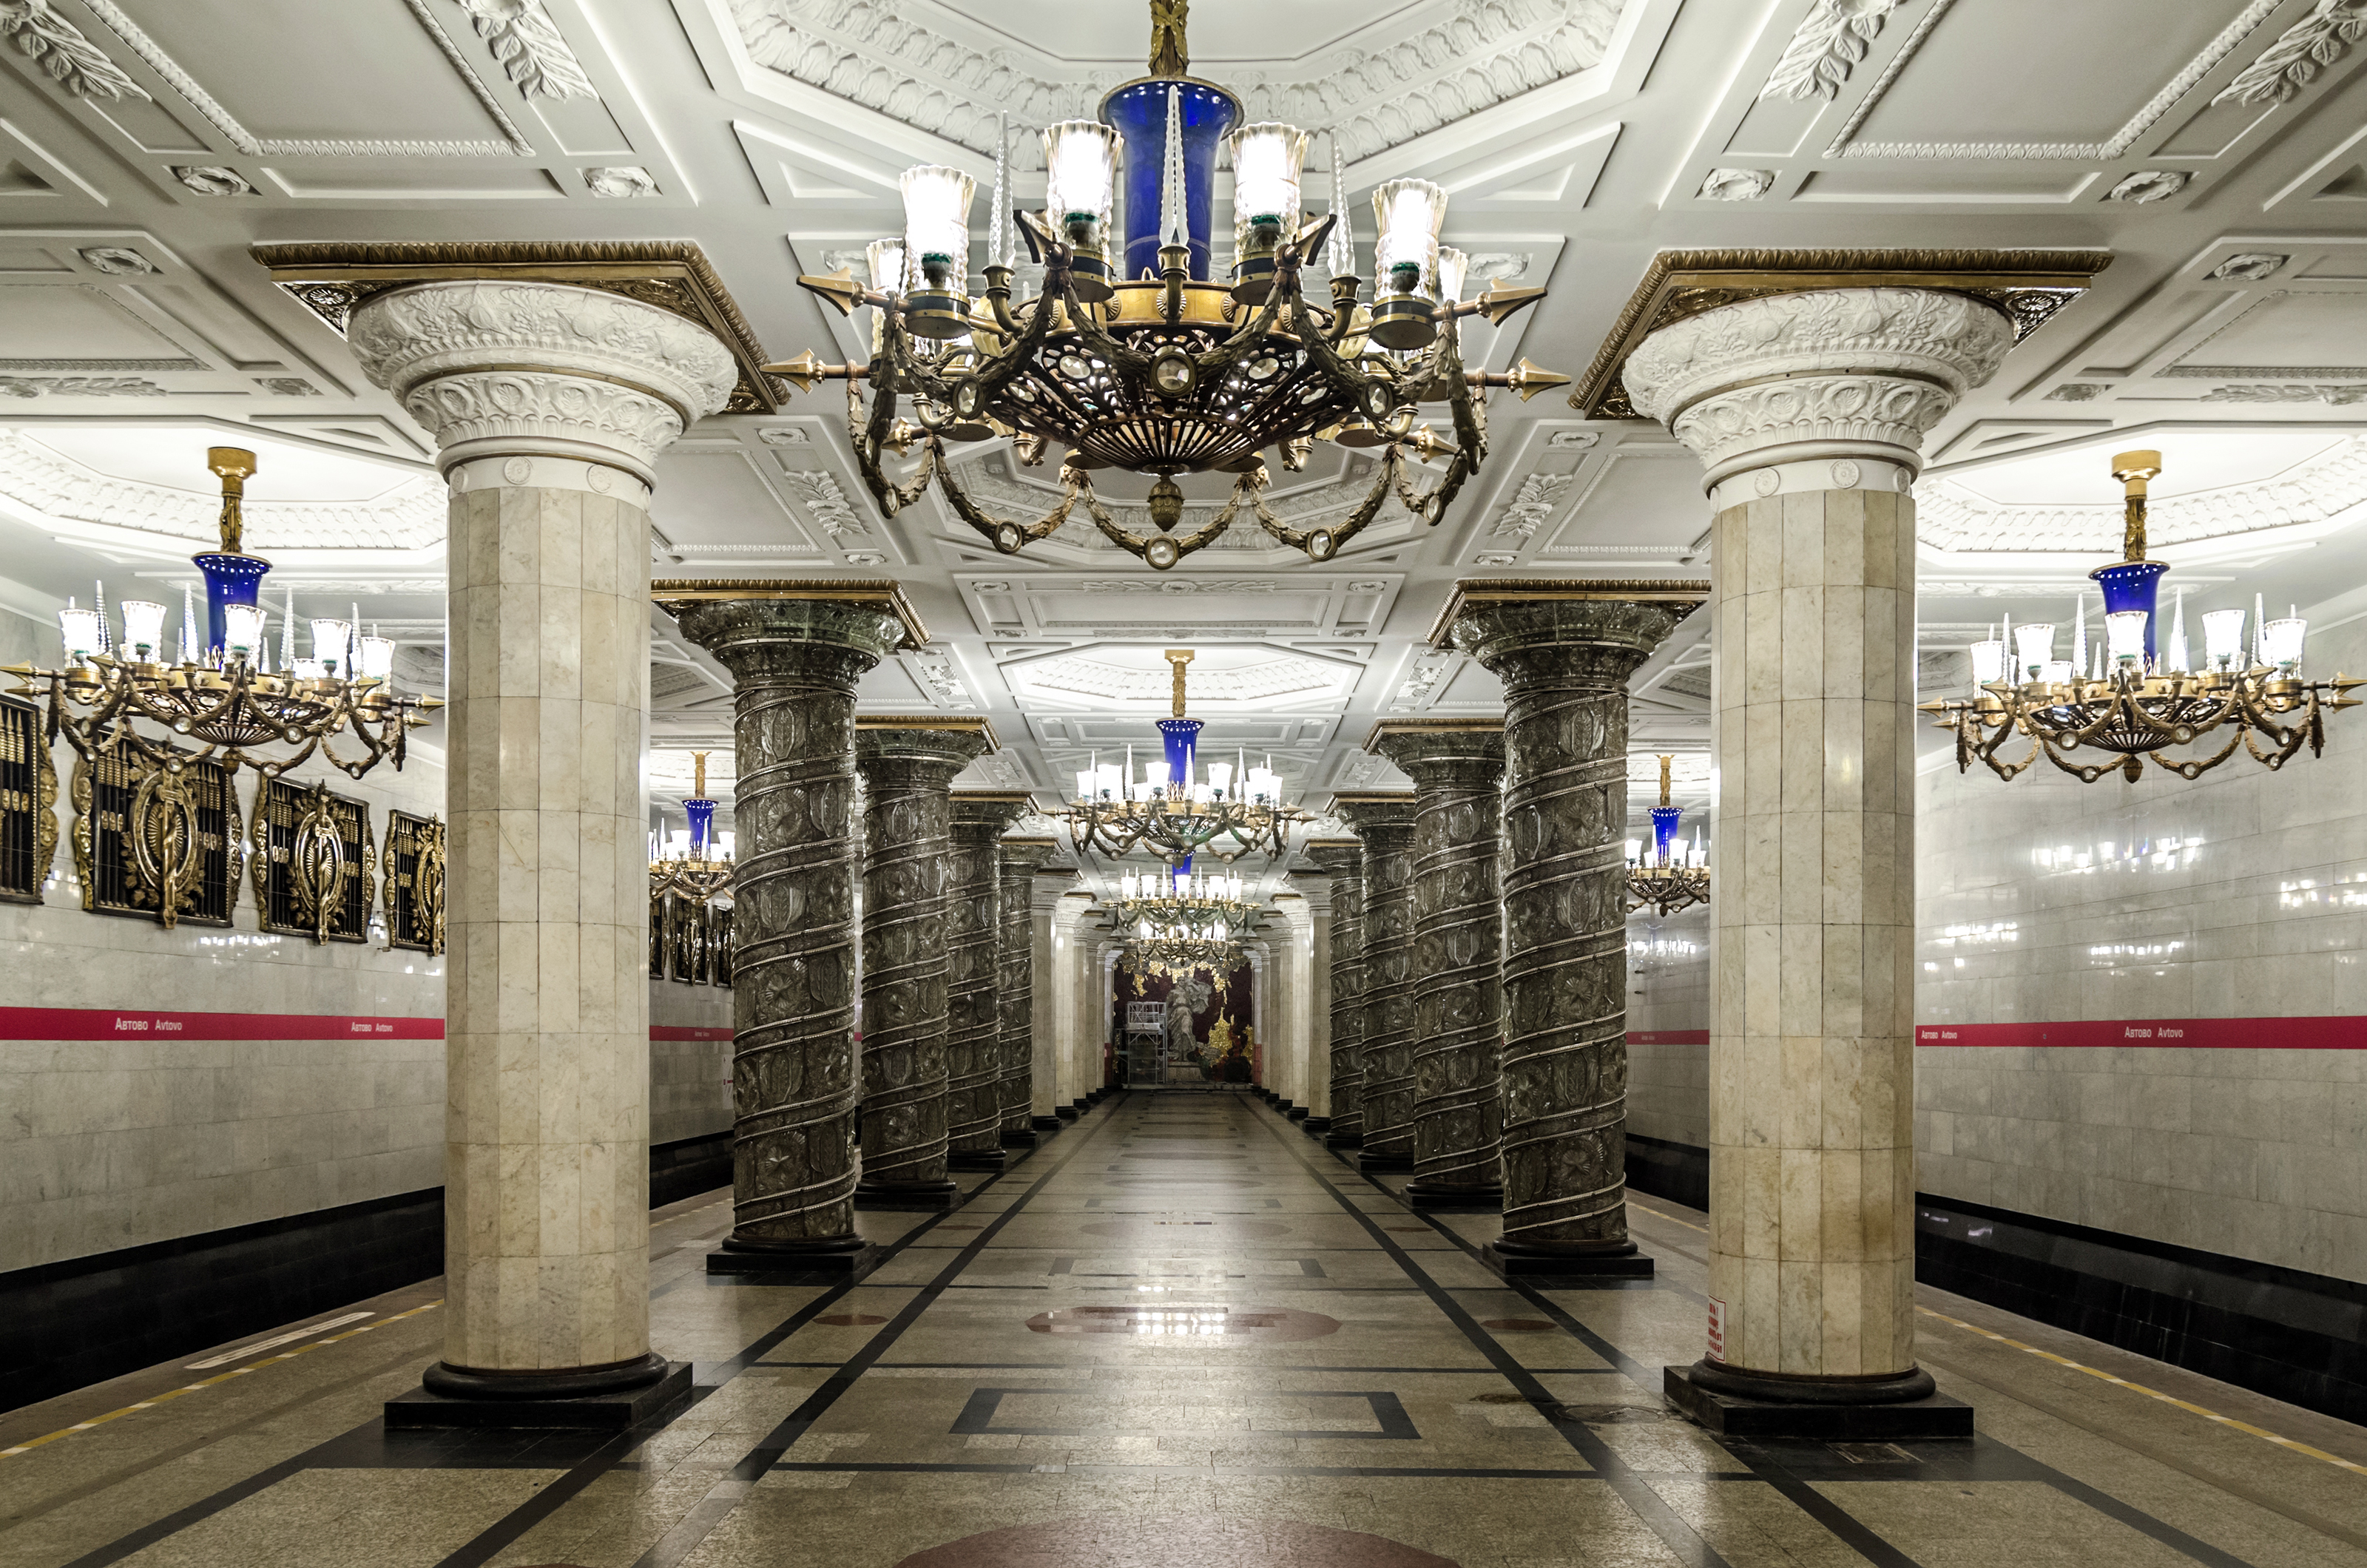 The St. Petersburg Metro: Red Line